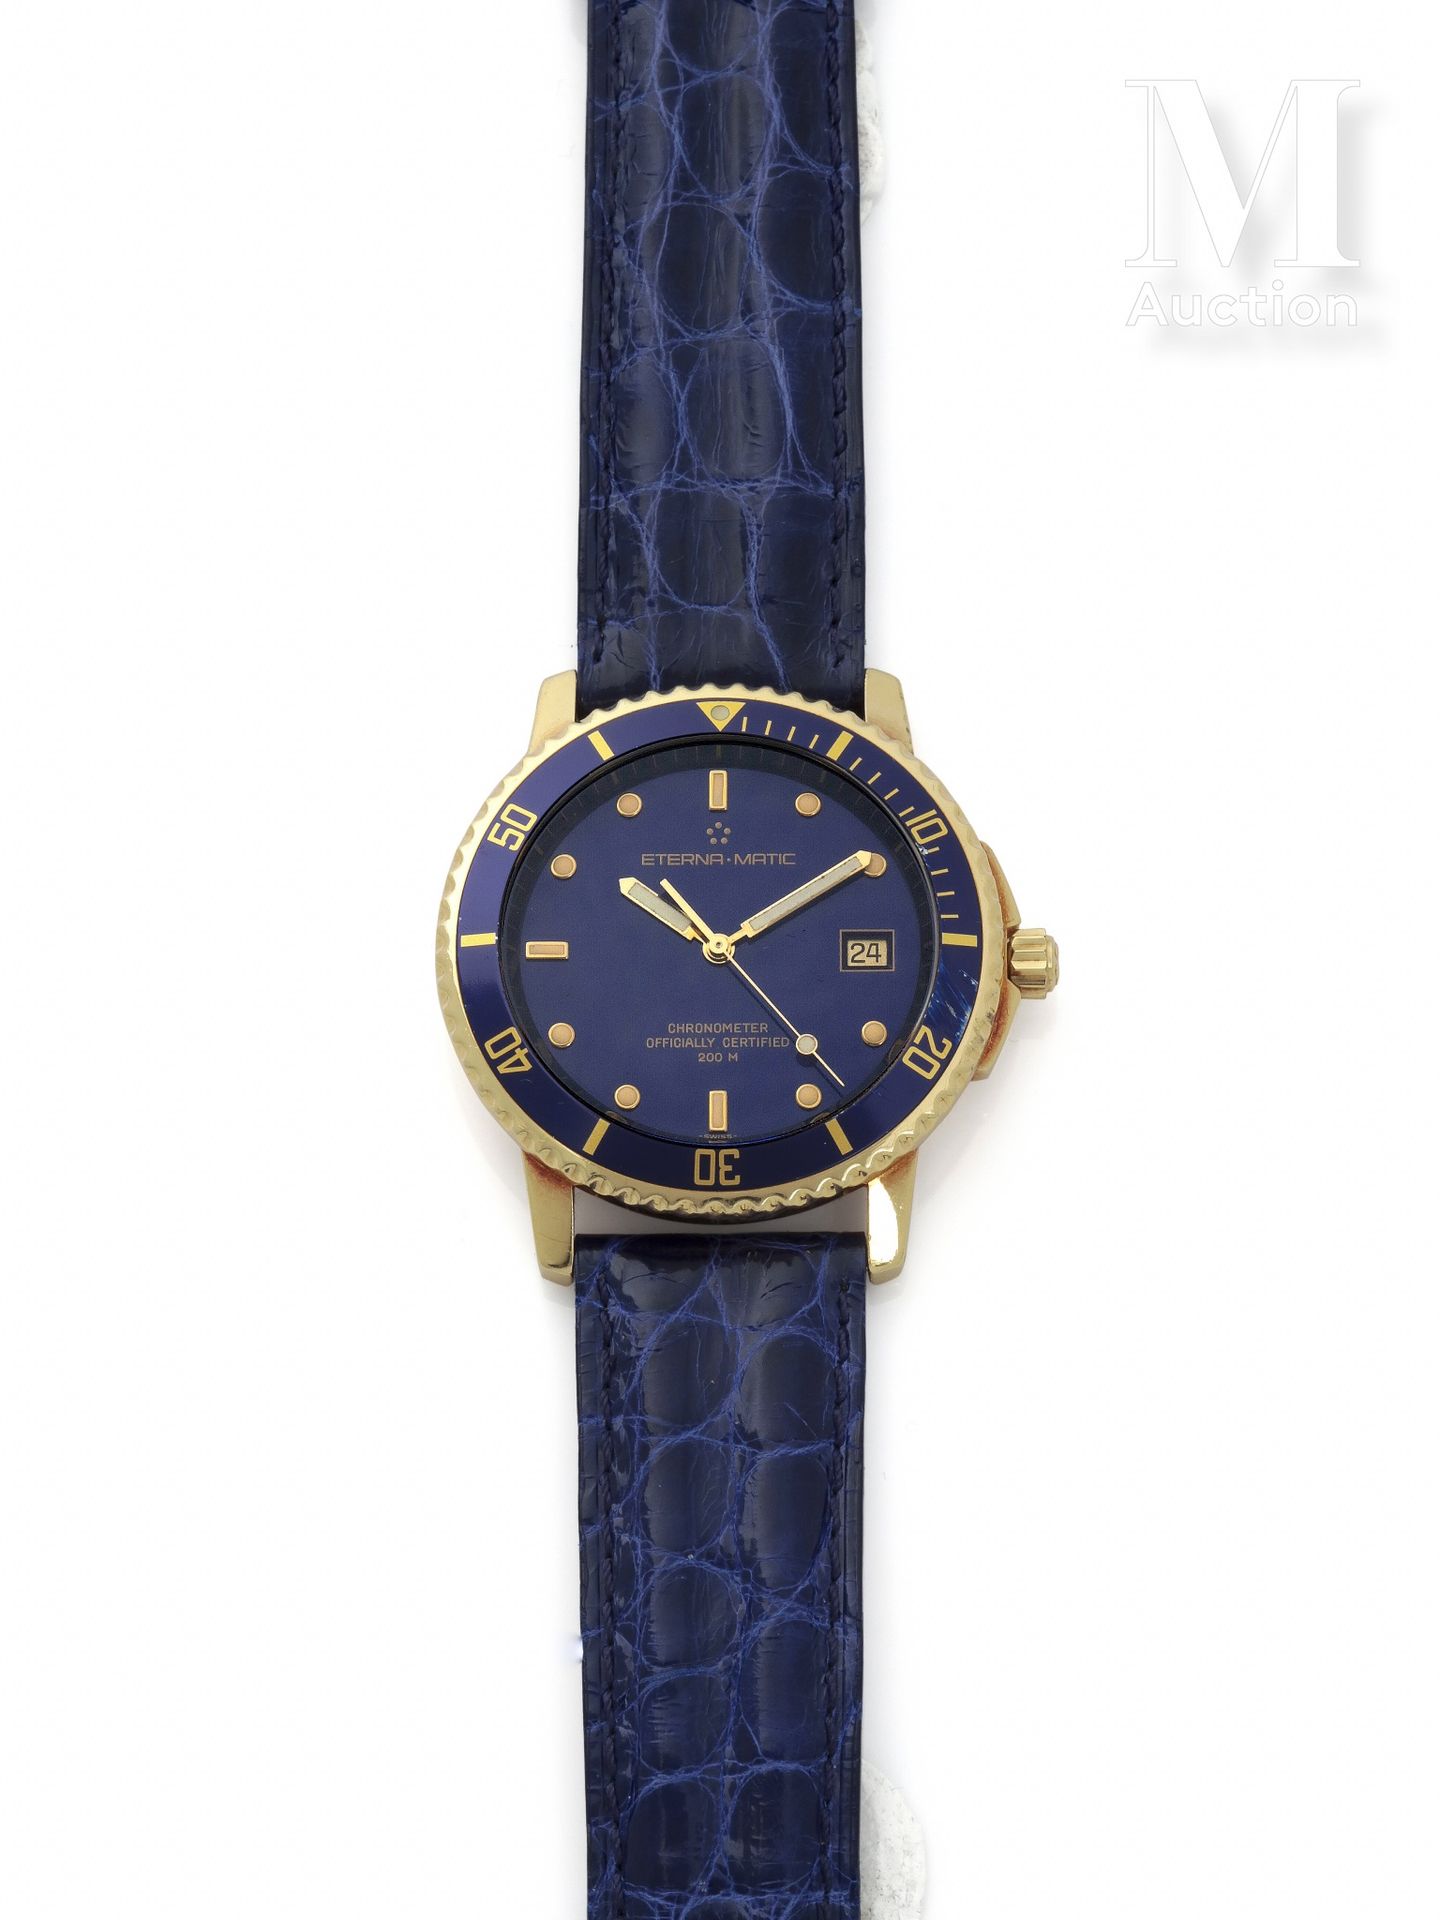 ETERNA-MATIC "Kontiki

Ref 619

Circa 1990

Men's diving watch in 18k gold.

Blu&hellip;